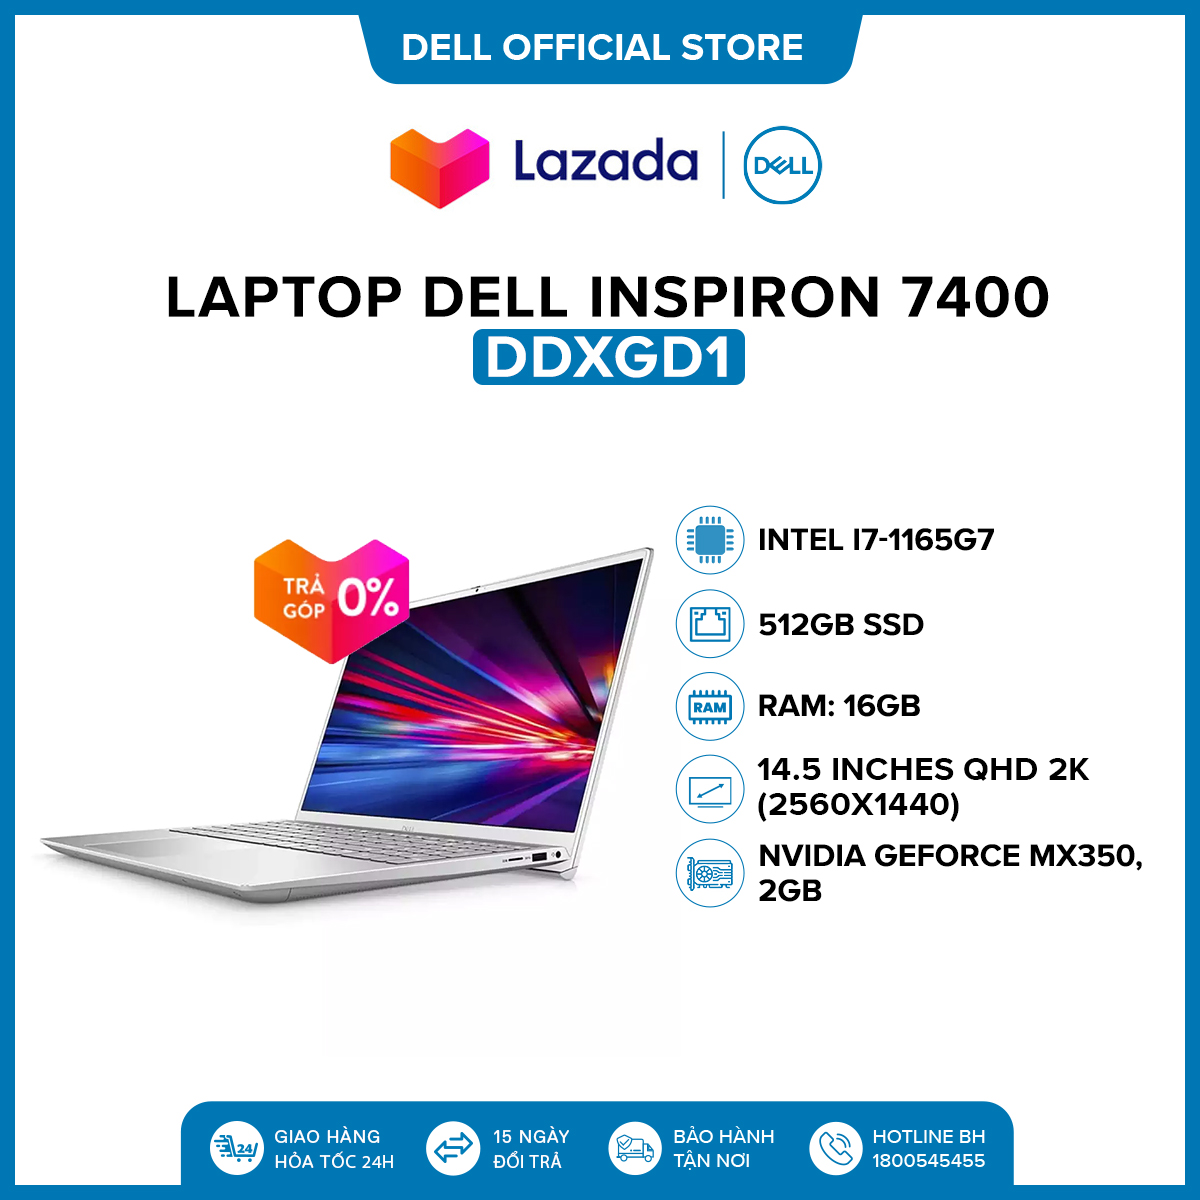 Laptop Dell Inspiron 7400 14.5 inches IPS QHD (Intel / i7-1165G7 / 16GB / 512GB SSD / NVIDIA GeForce MX350, 2GB / Finger Print / Win 10 Home SL) l Silver l DDXGD1 l HÀNG CHÍNH HÃNG